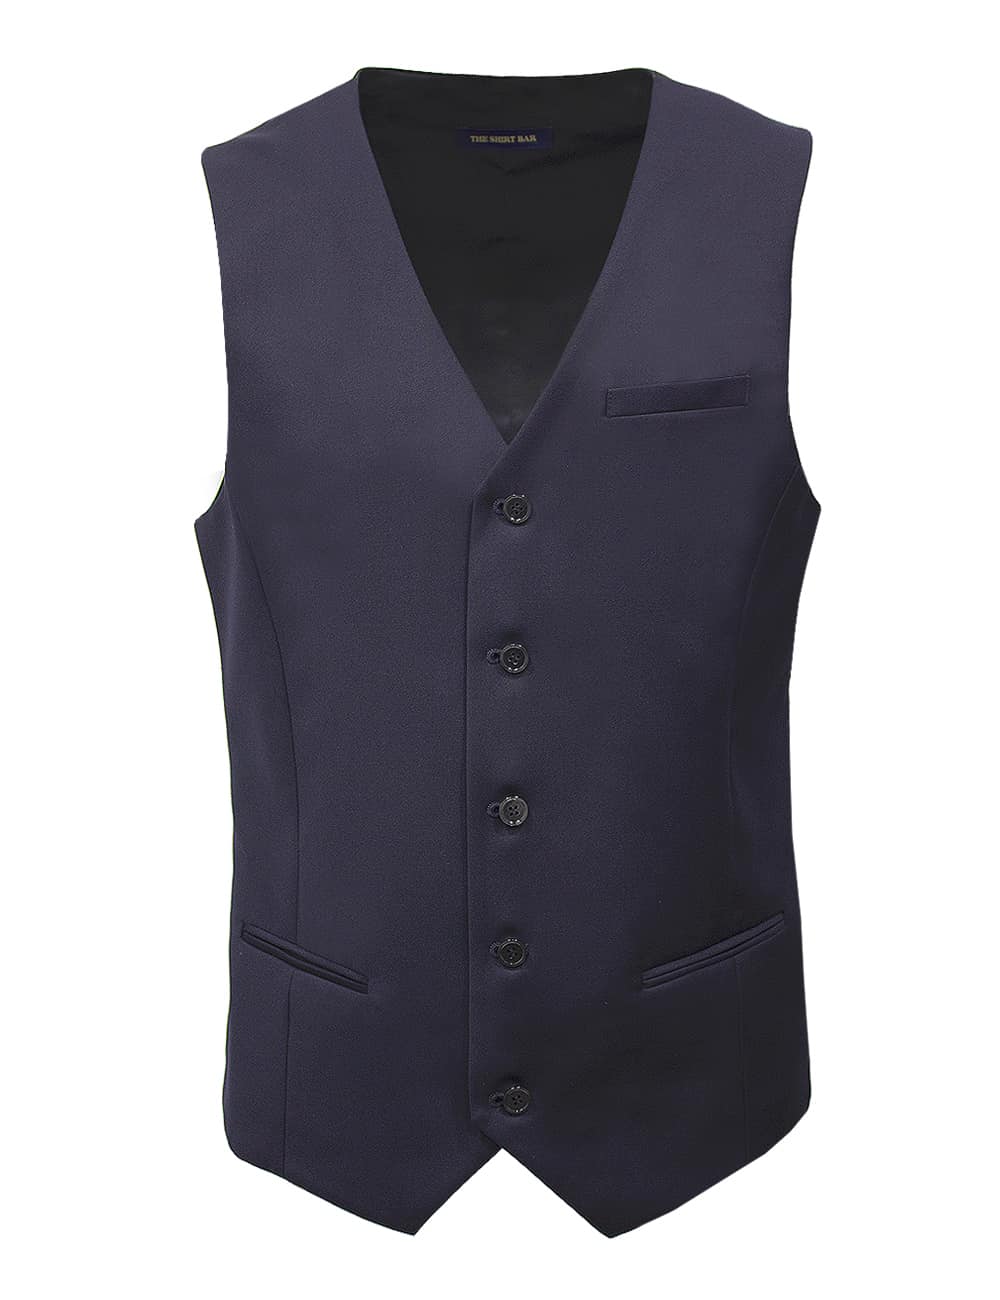 Black Twill Slim / Tailored Fit Single Breasted Vest - V1V2.4 - The ...